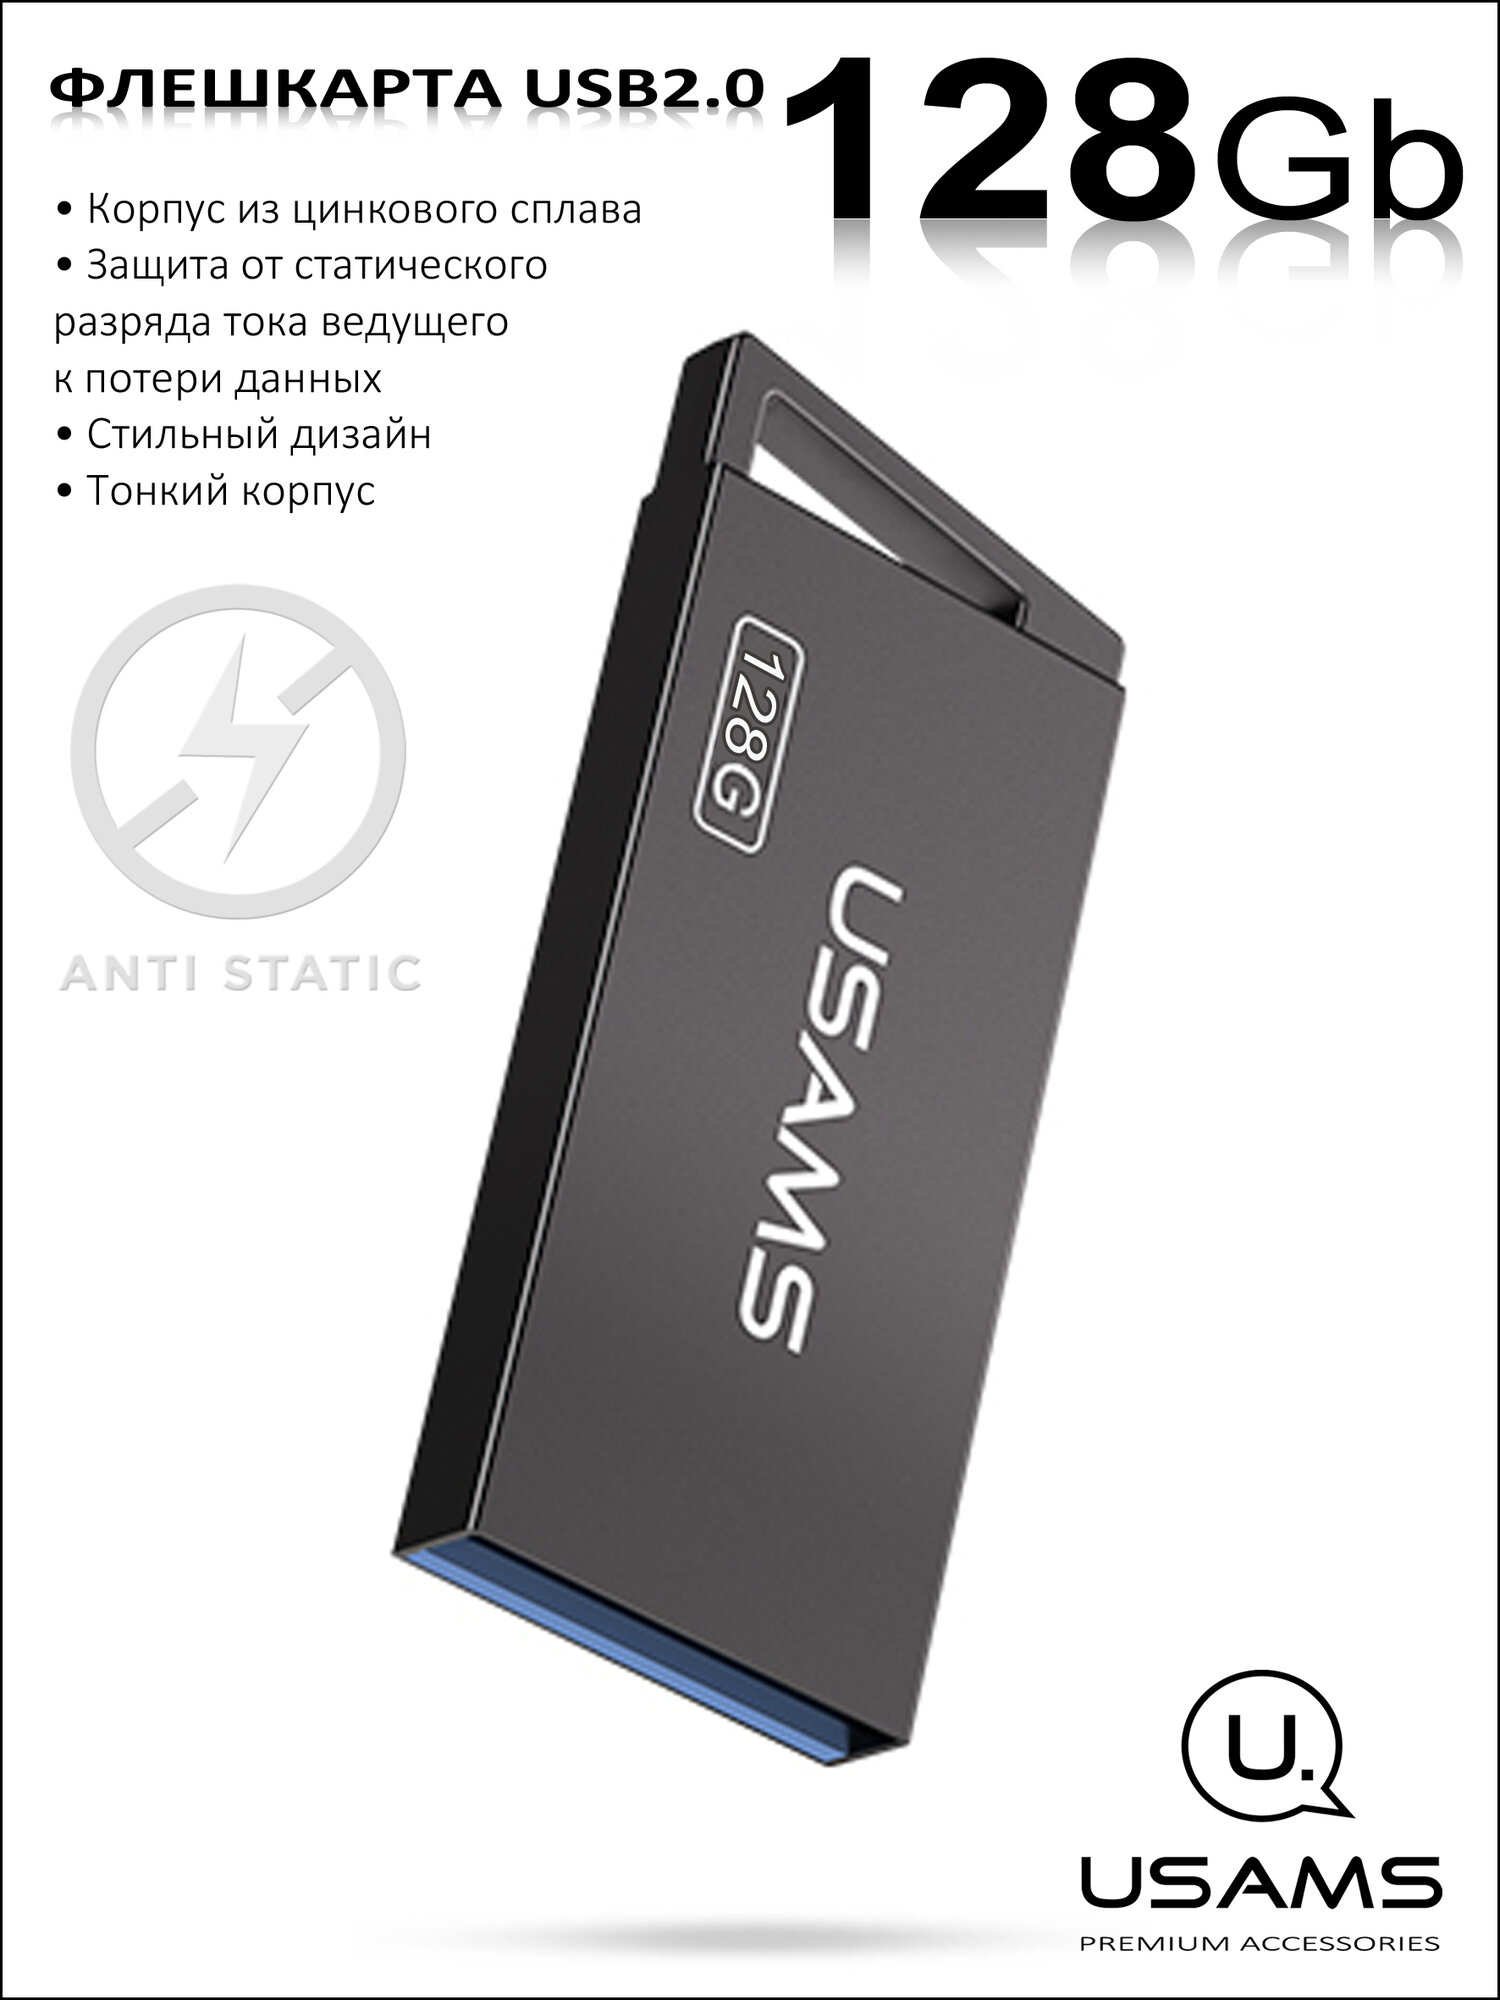 Флеш-накопитель USAMS • USB2.0 • 128GB • MINI флешка брелок для компьютера и ноутбука